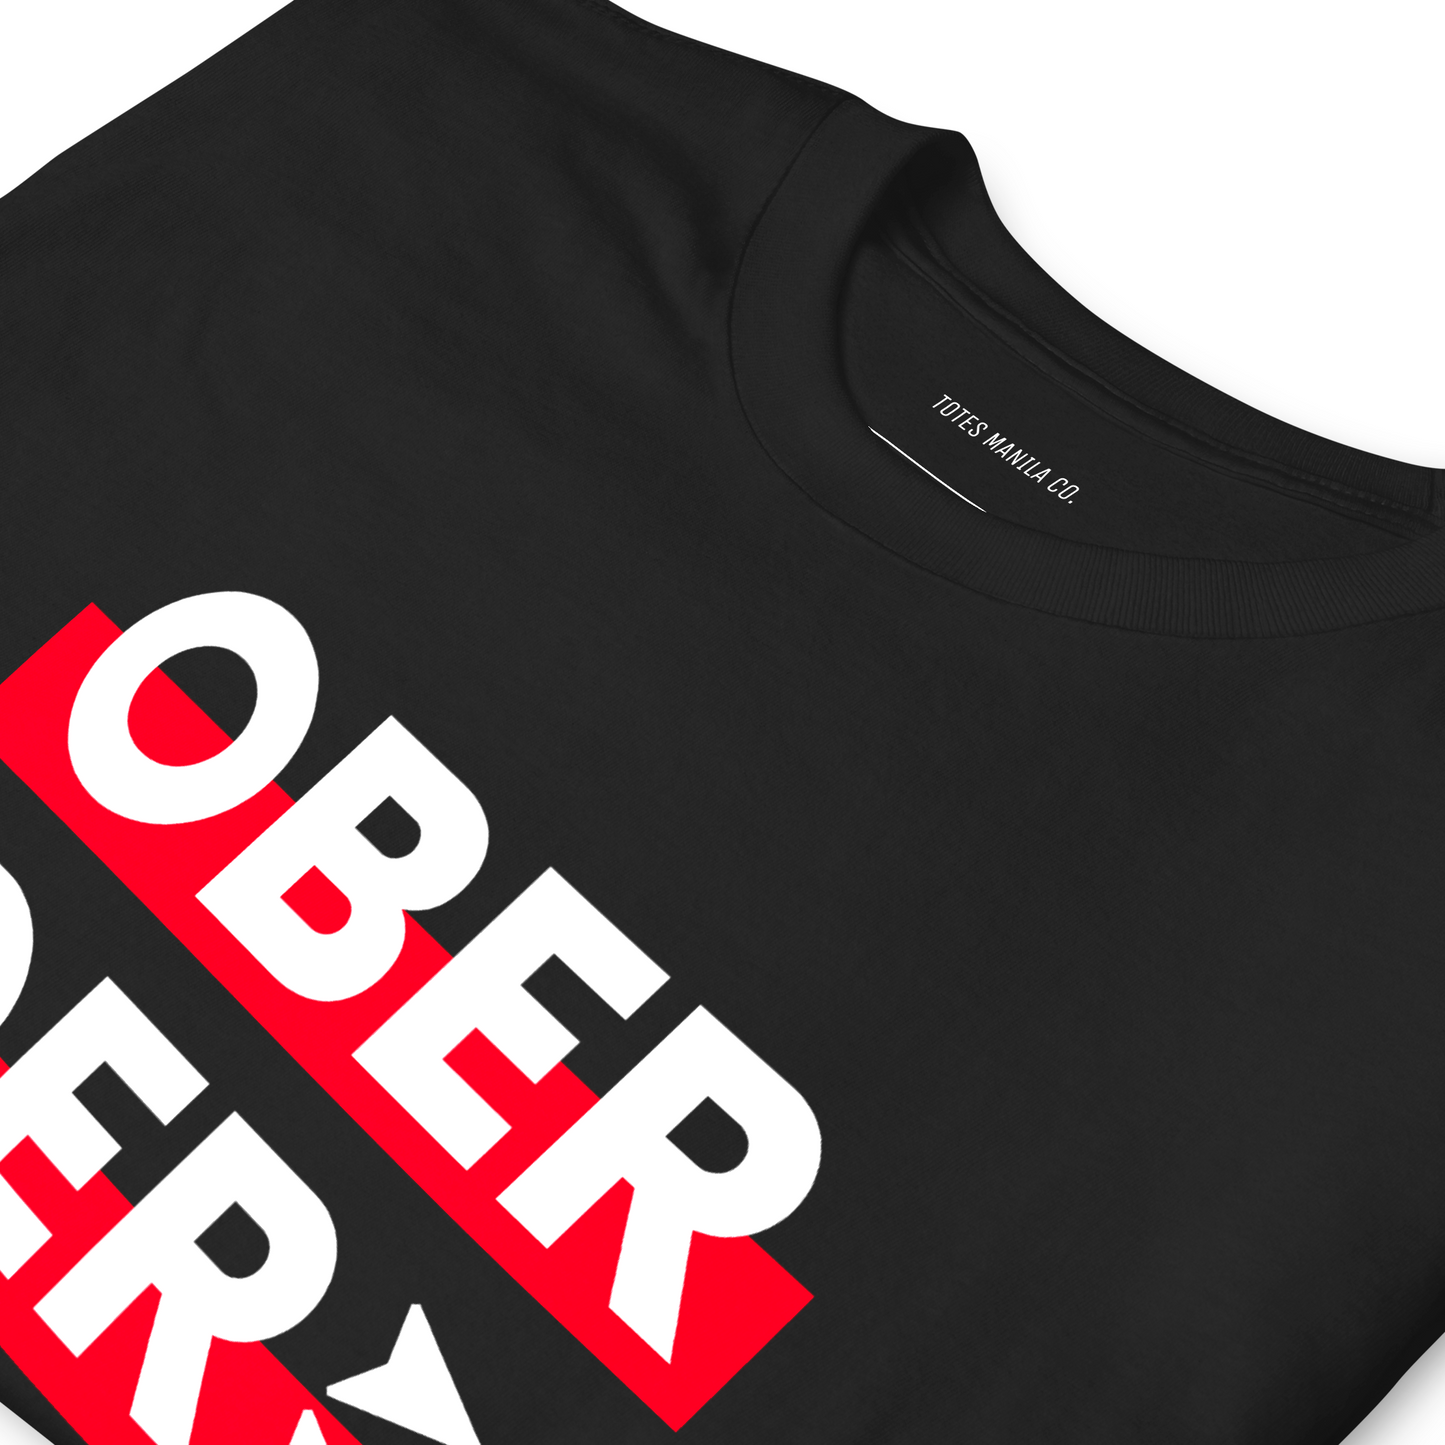 Close up of the Ober Der design in a unisex black t-shirt.